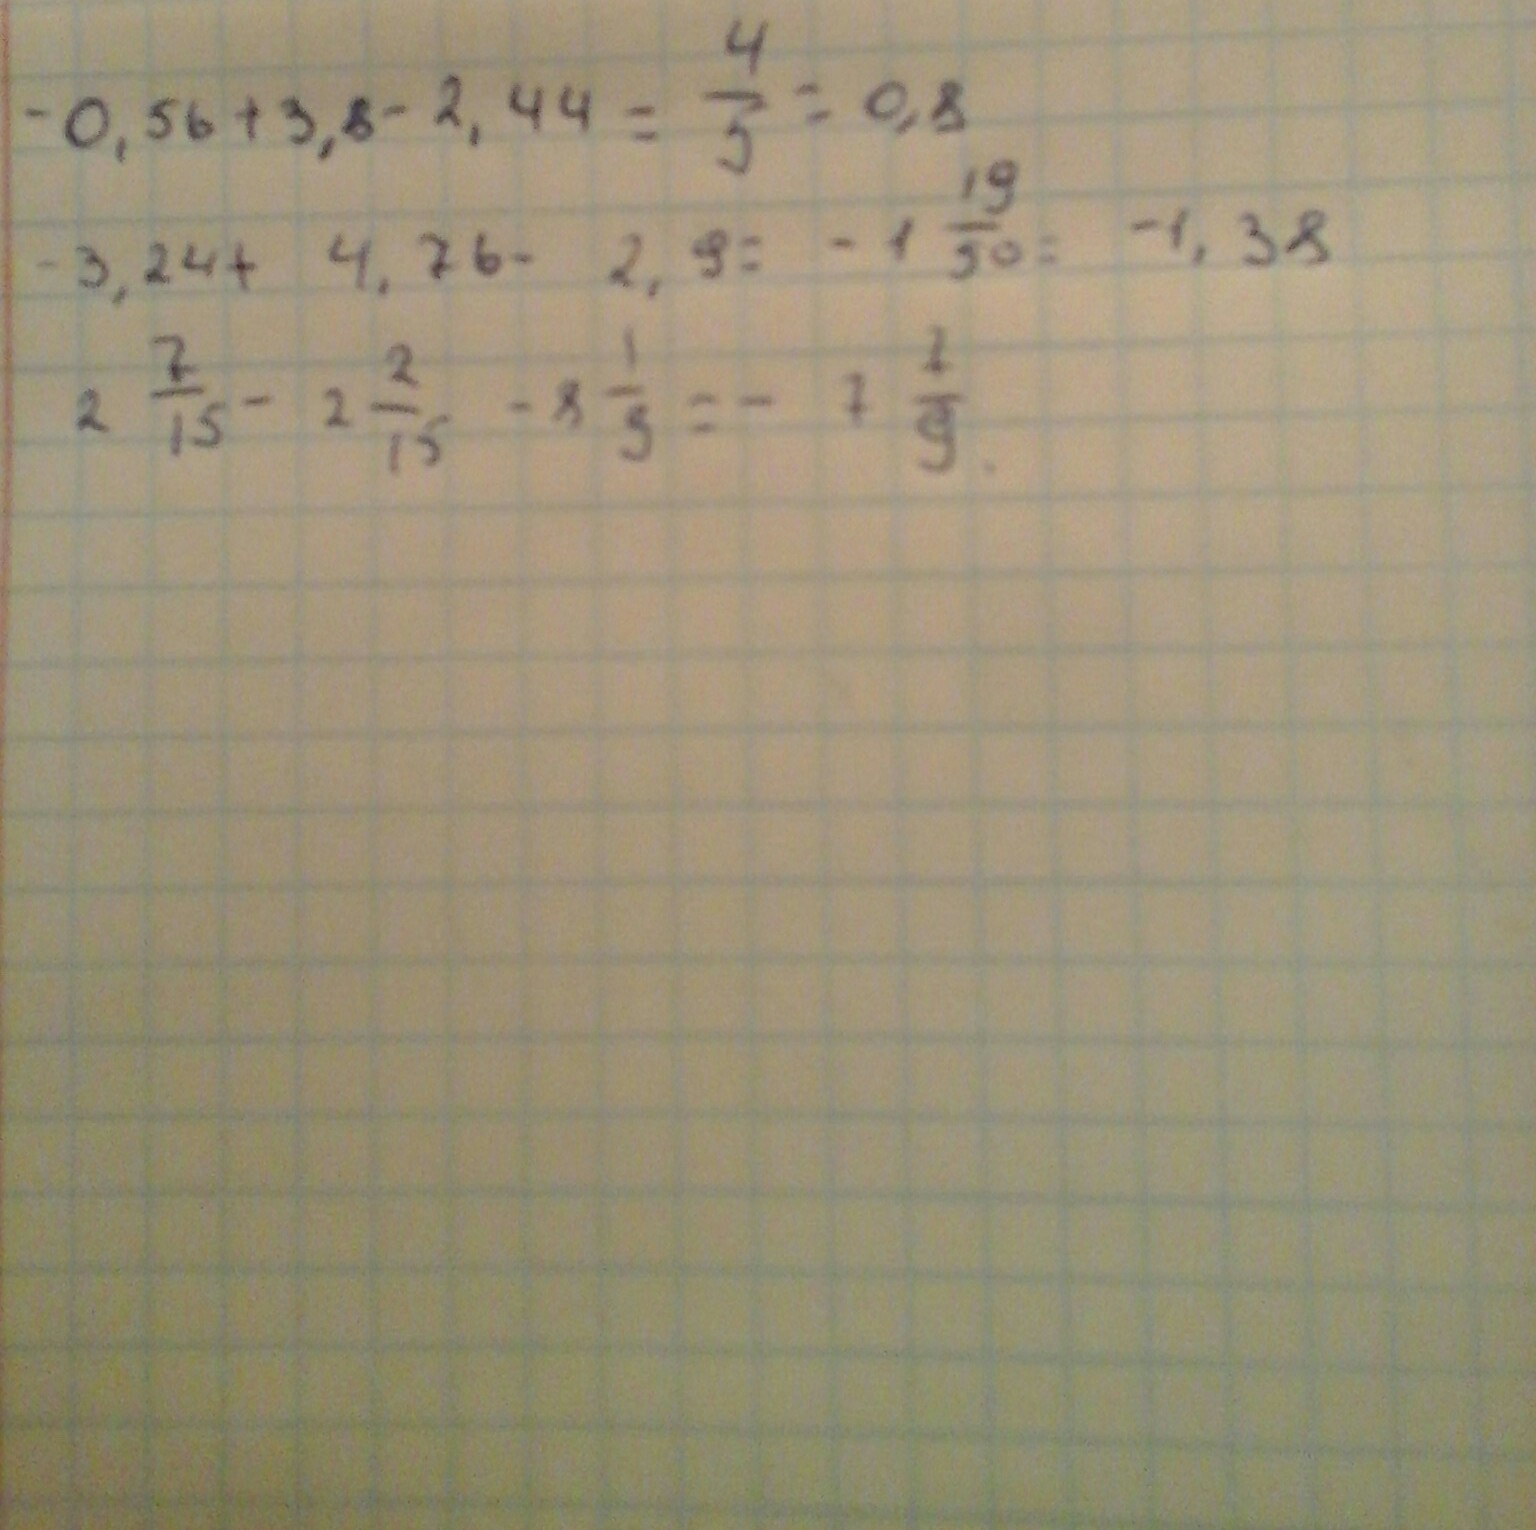 0 08 0 44. -, 56+(3.8-2.44). -056+(3,8-2,44). -0,56+(3,8-2,44). (-0,76-0,44):2 2/3 Решение по действиям.